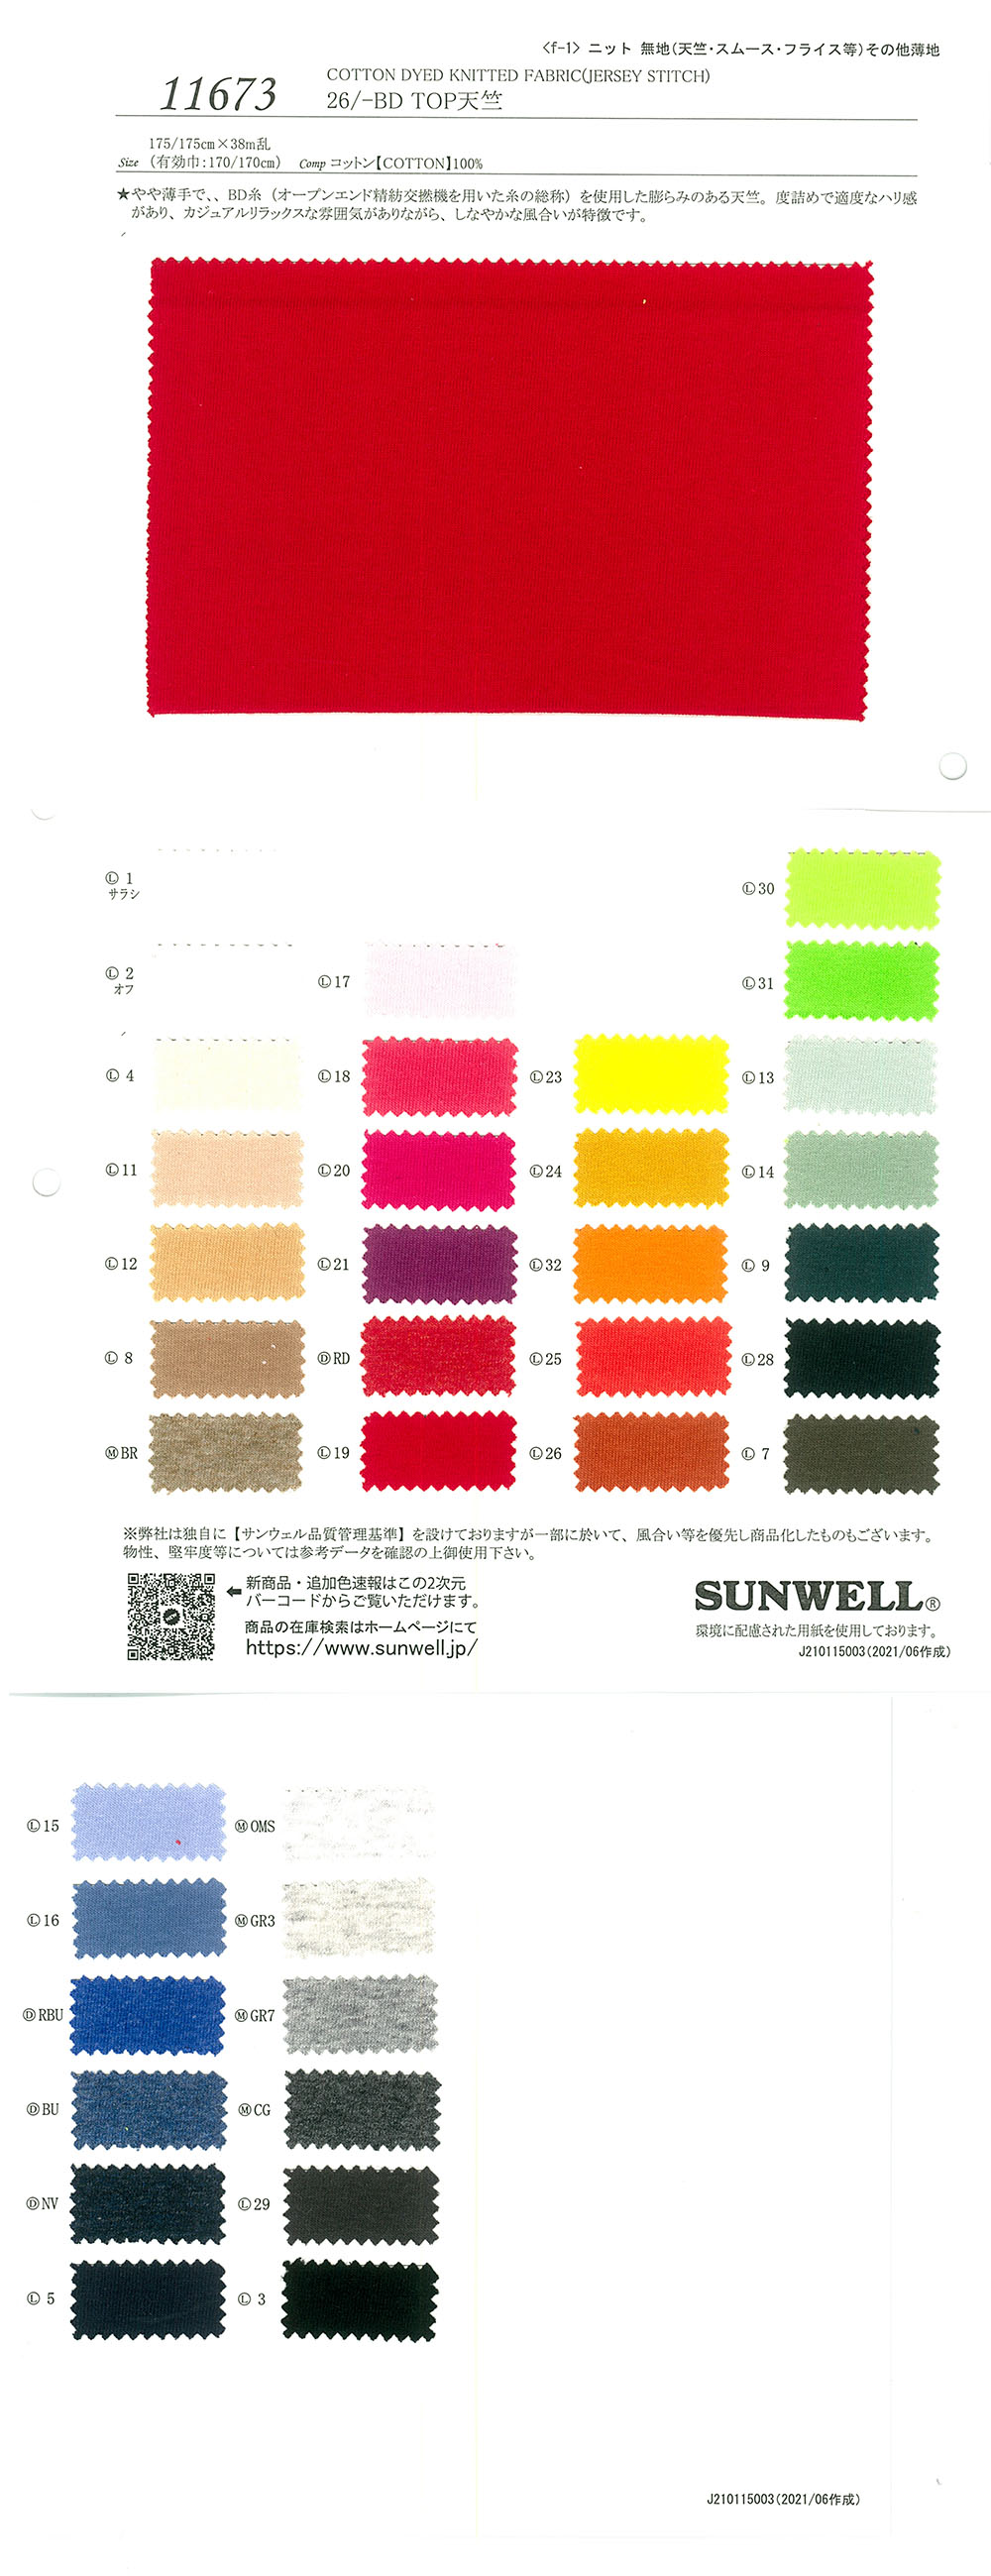 11673 26/-BD TOP Cotton Tianzhu Cotton[Textile / Fabric] SUNWELL